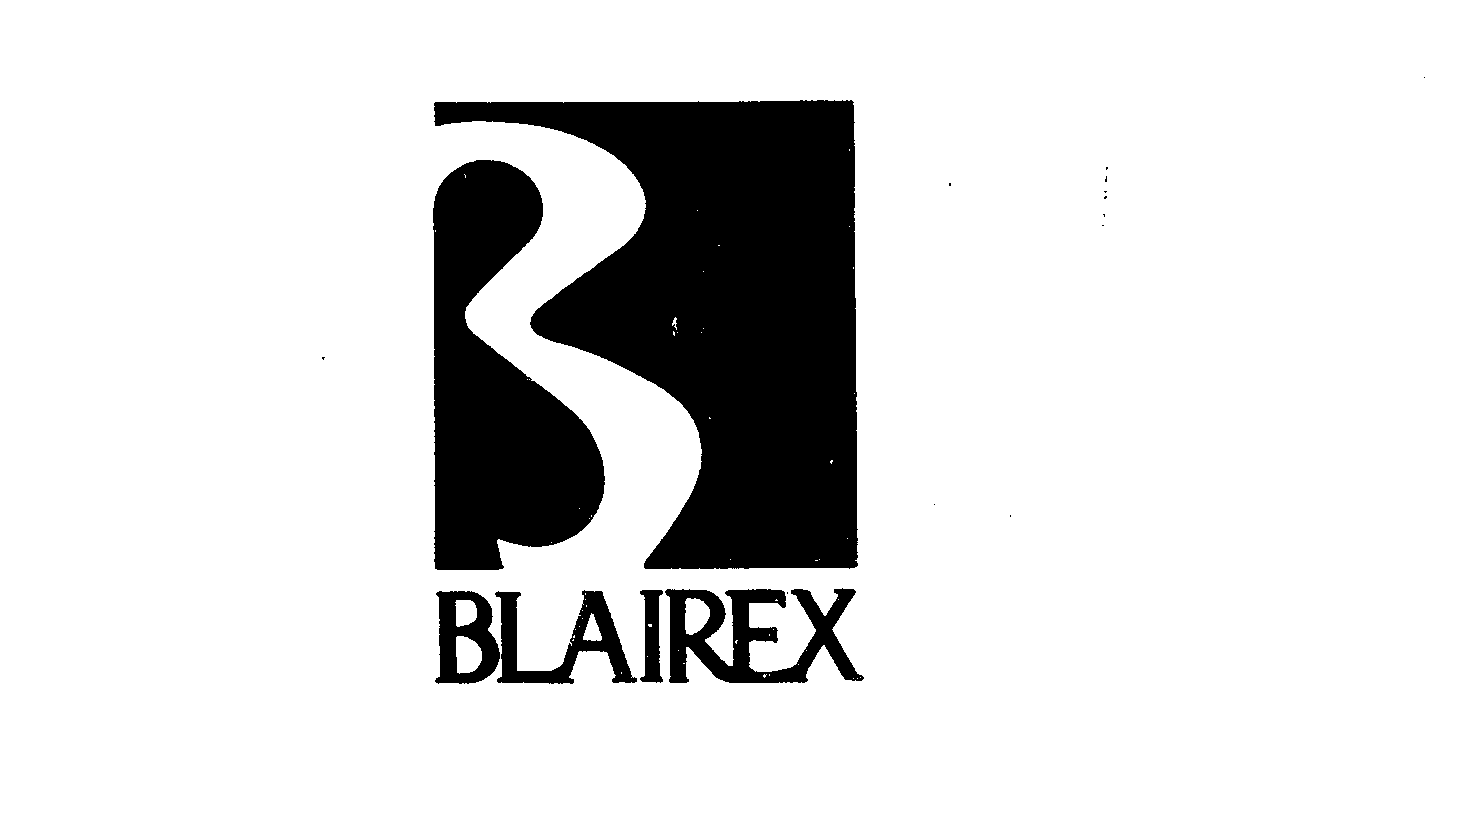 BLAIREX